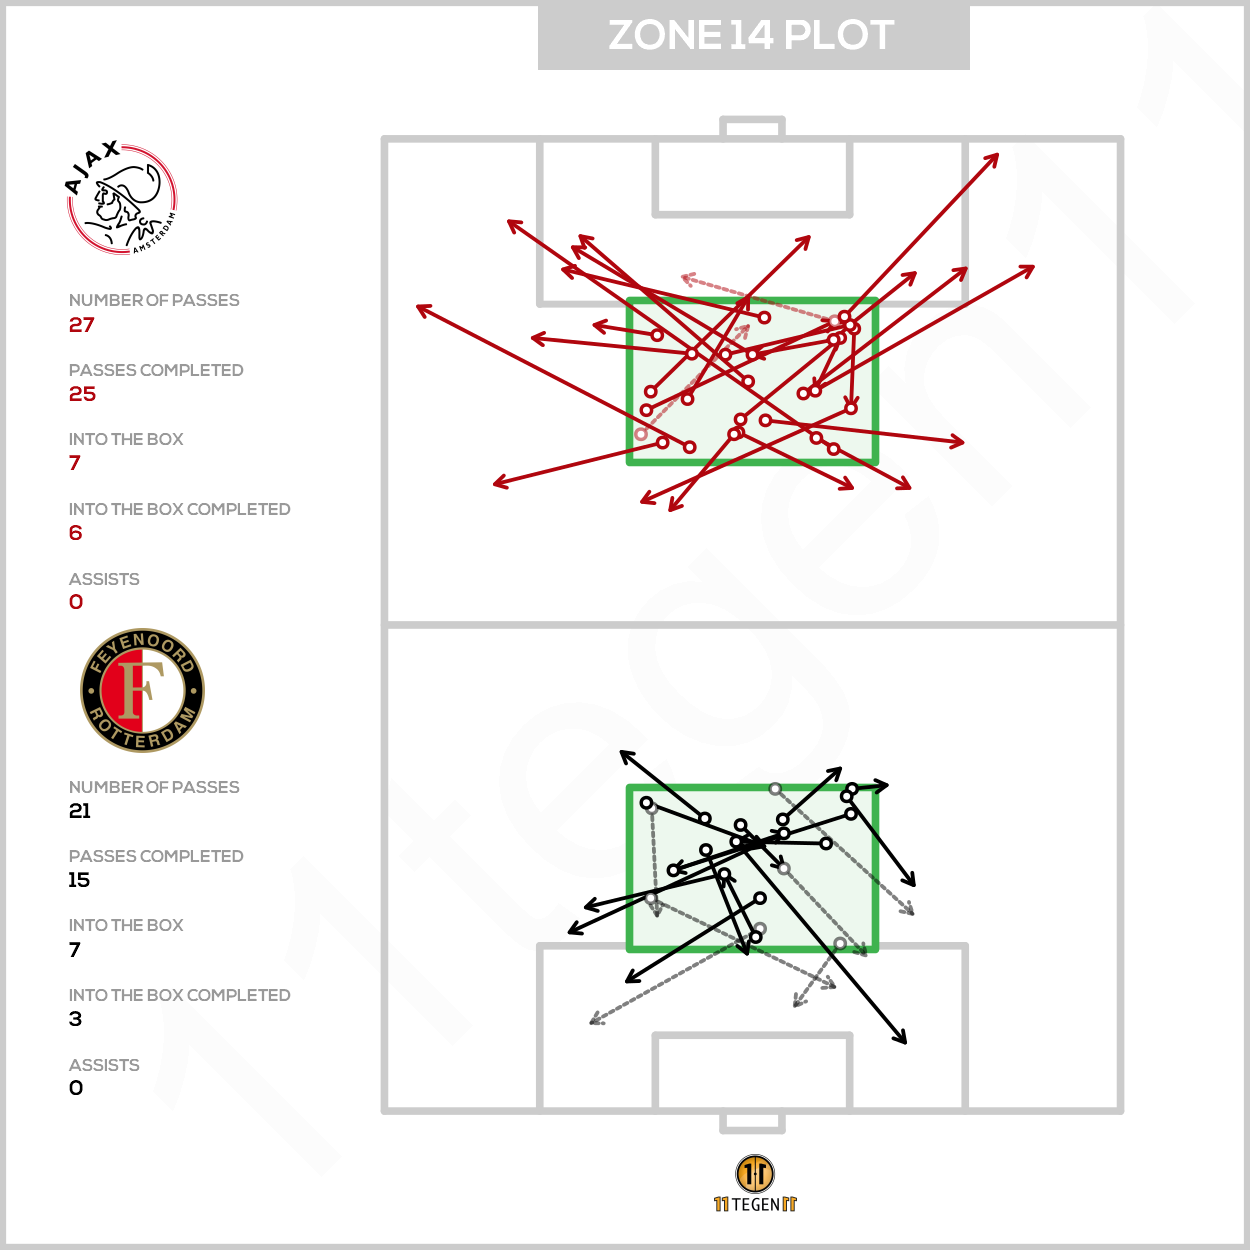 2021 01 17 Zone 14 Plot Ajax Feyenoord